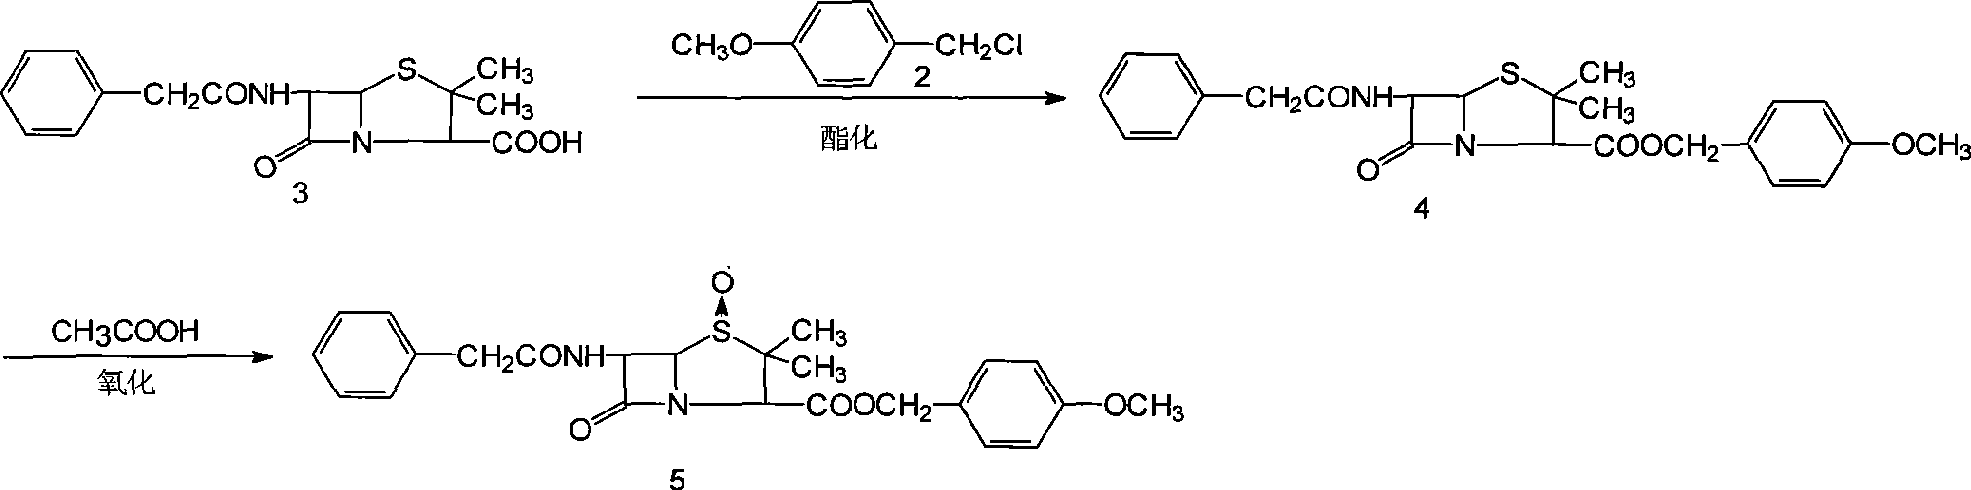 Synthesis method for 7-neophedan-3-chloromethyl cephalosporanic p-methoxy benzyl ester